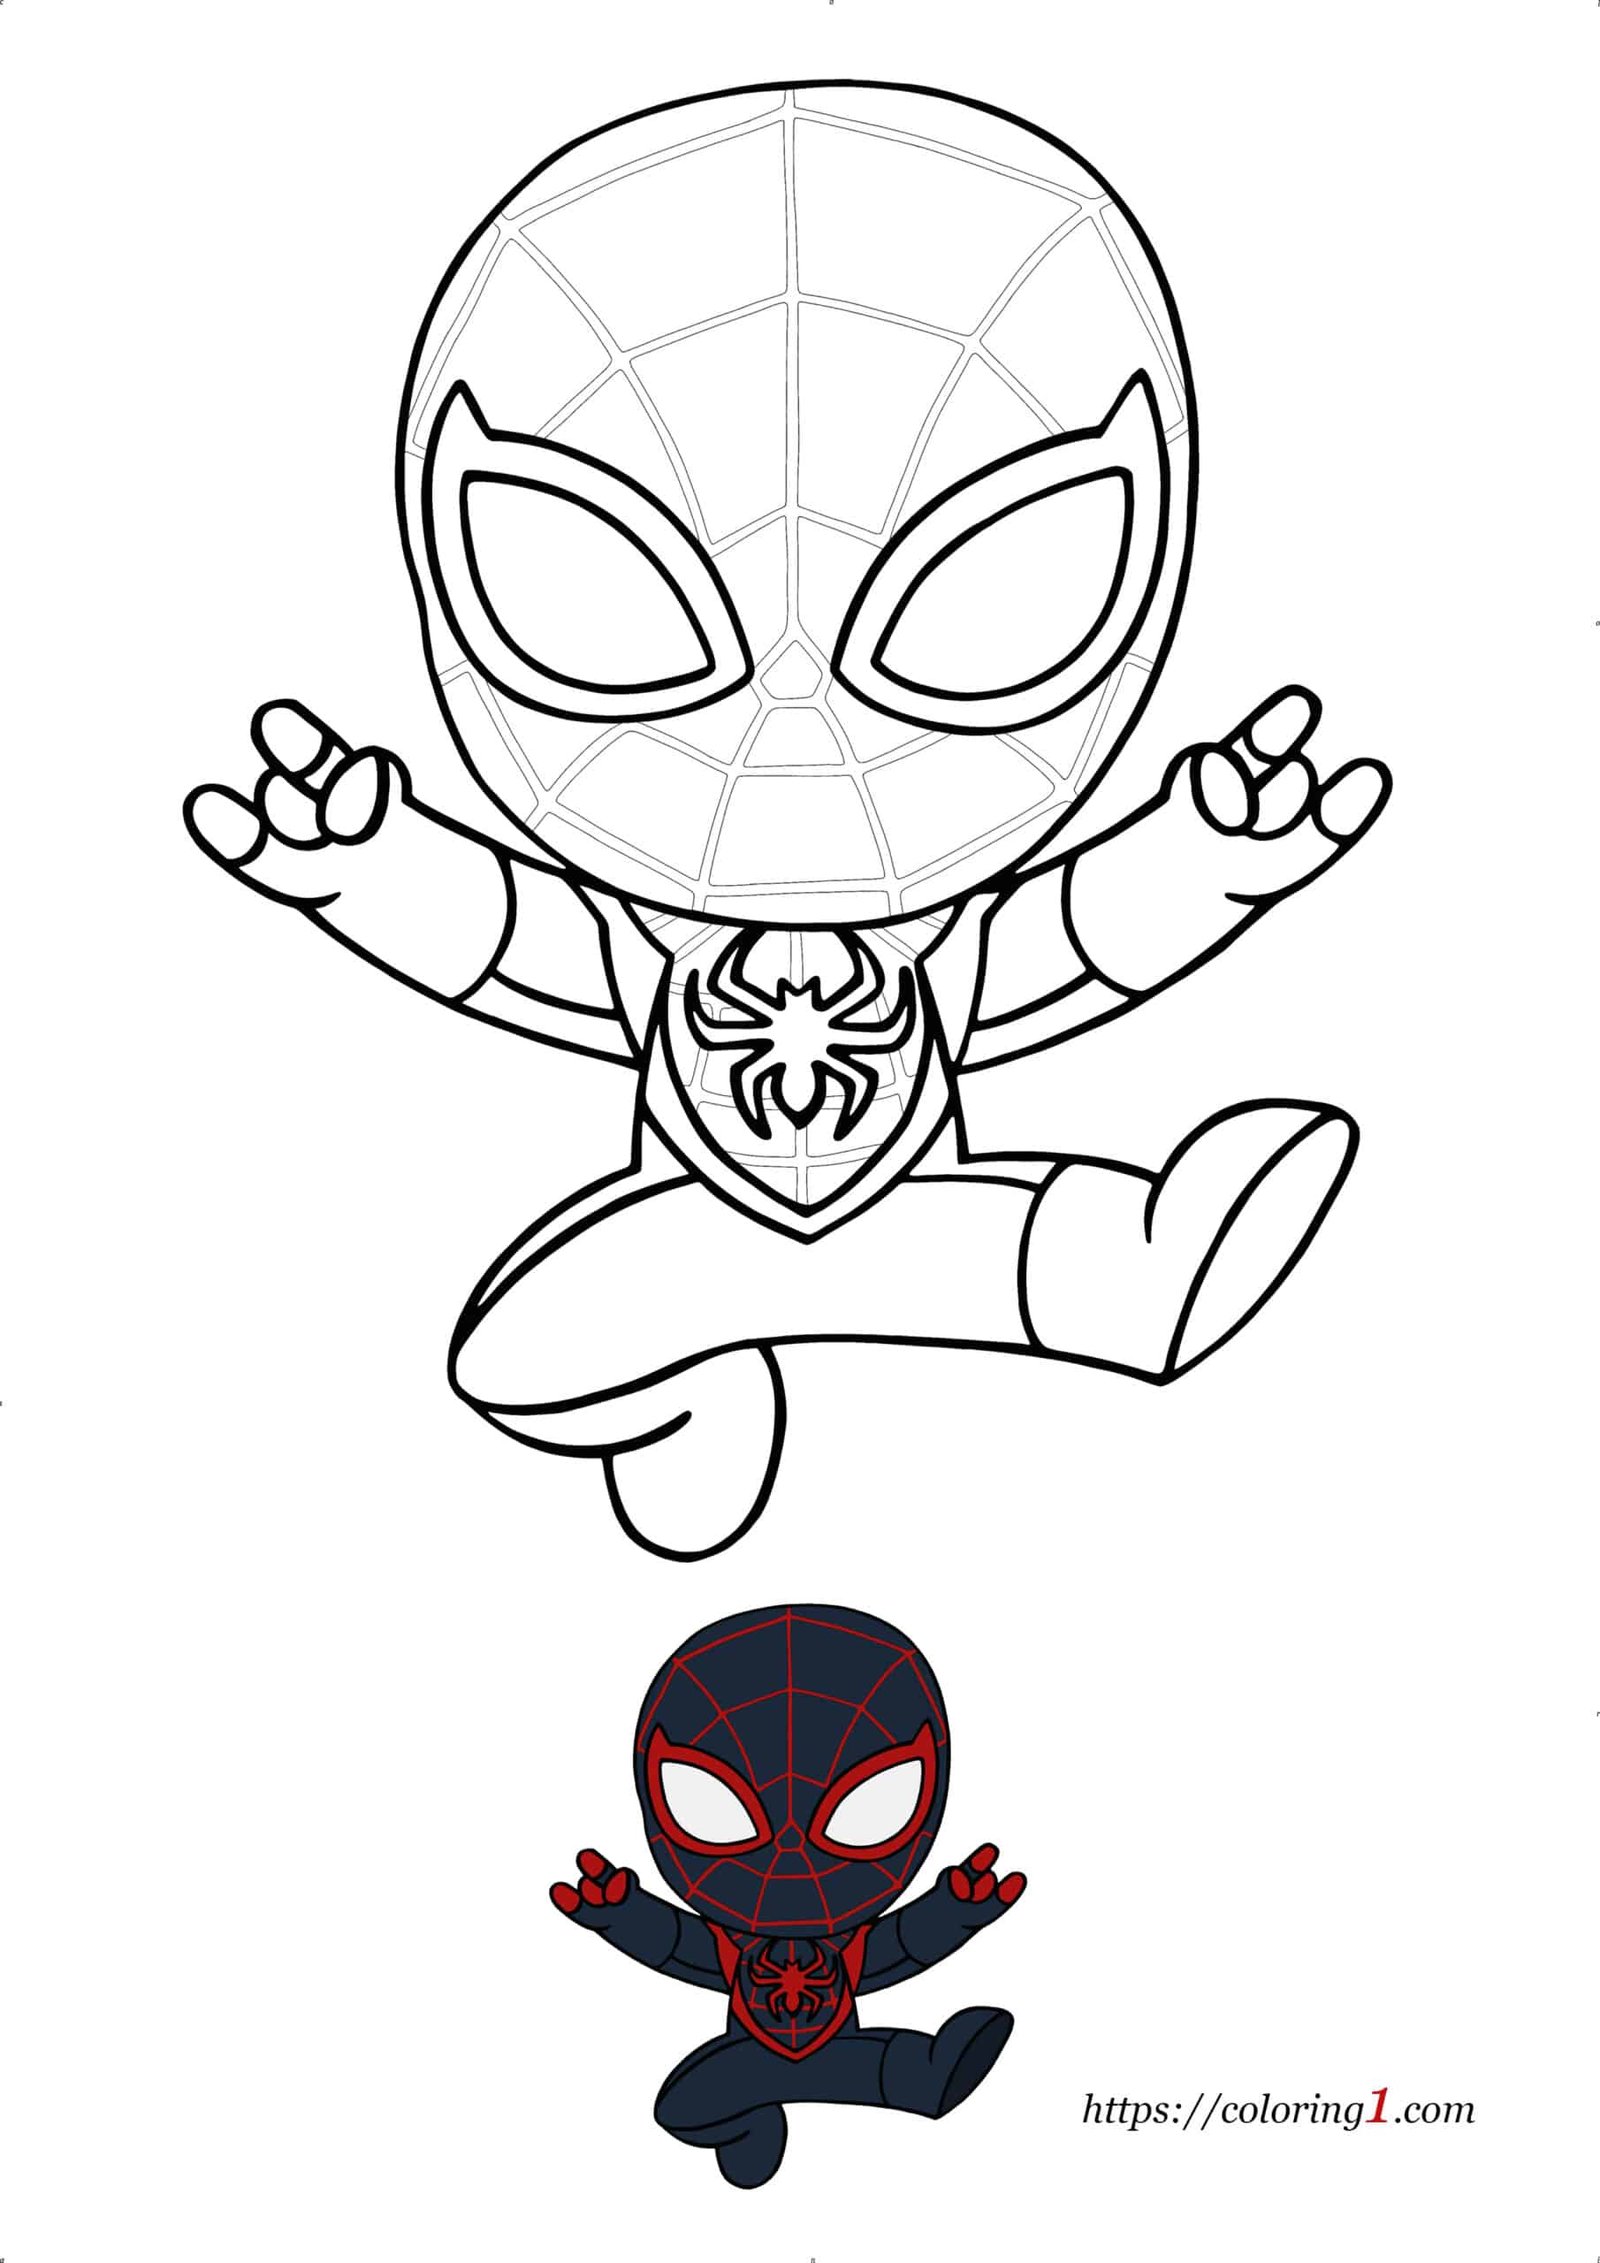 Leuke Miles Morales Spiderman kleurplaat om uit te printen voor kinderen